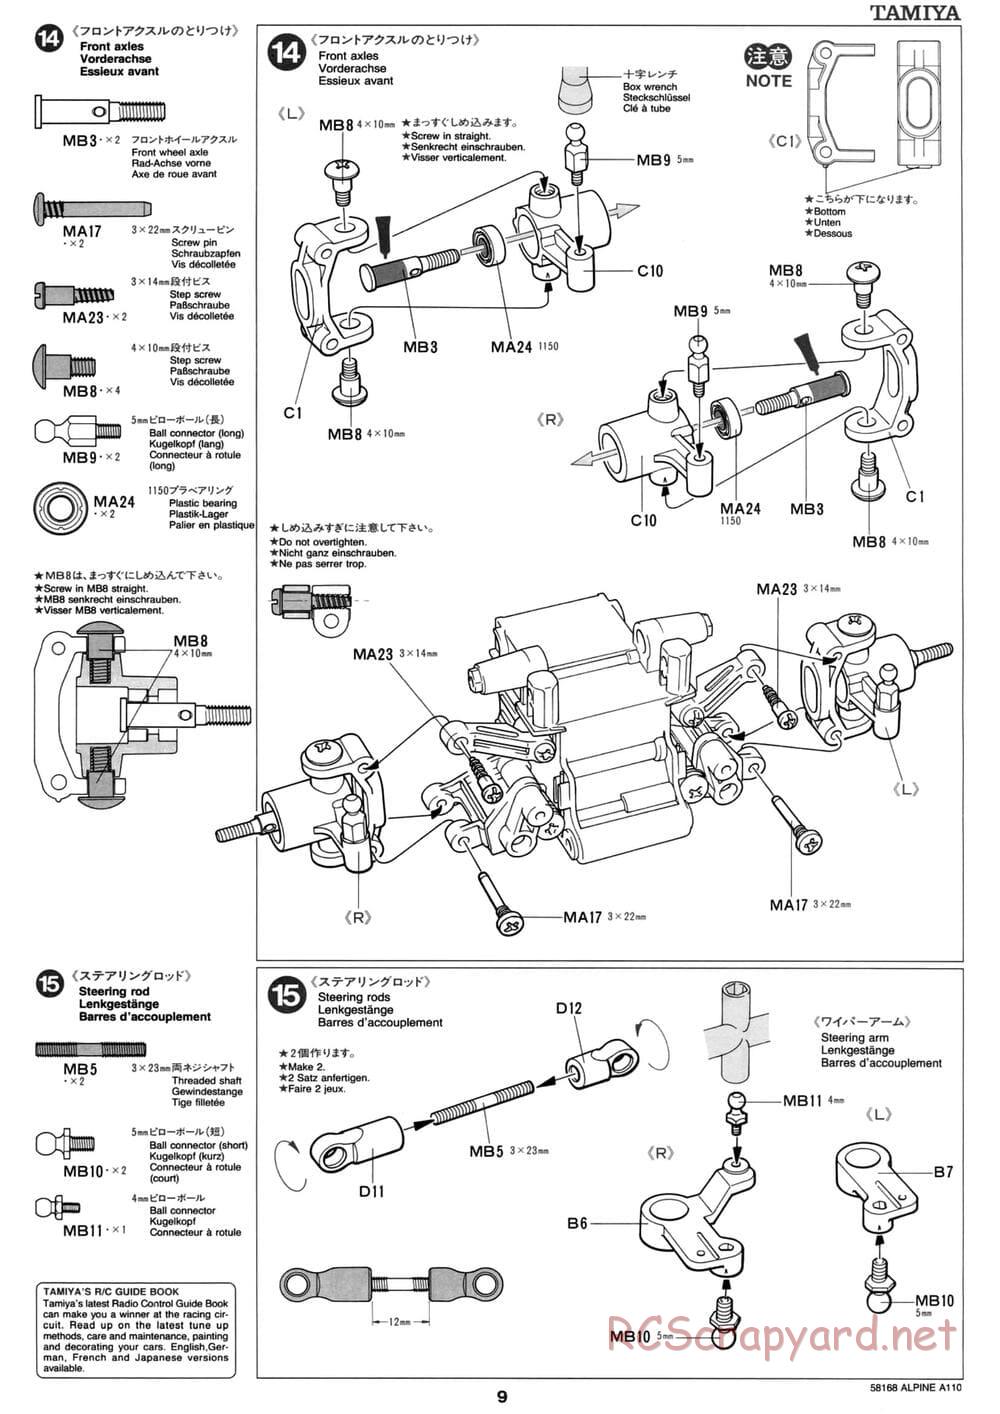 Tamiya - Alpine A110 - M02 Chassis - Manual - Page 9